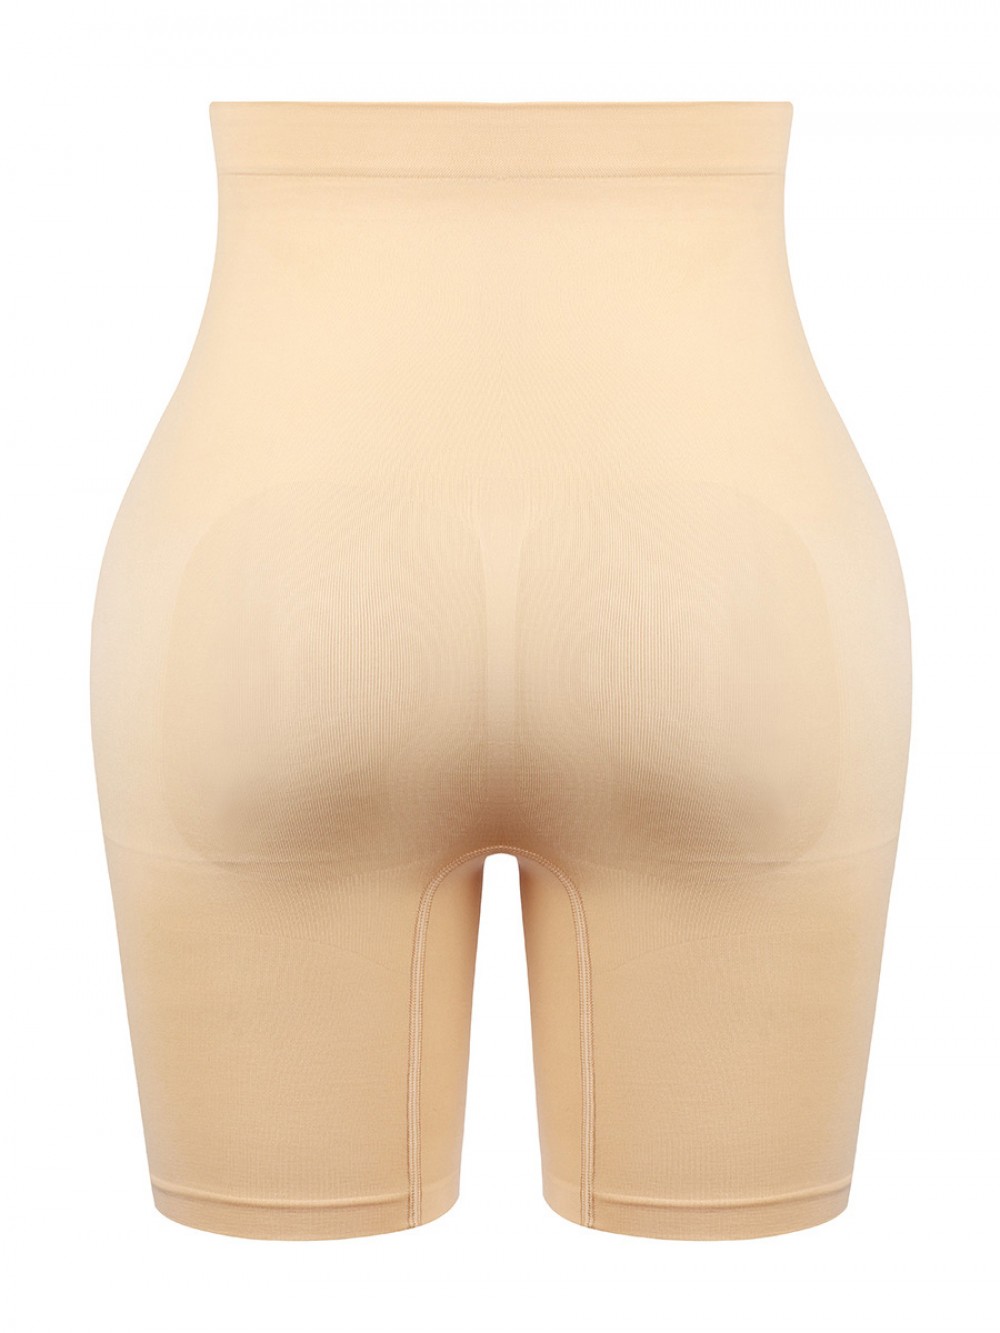 Apricot Large Size Seamless Shapewear Shorts Natural Shaping